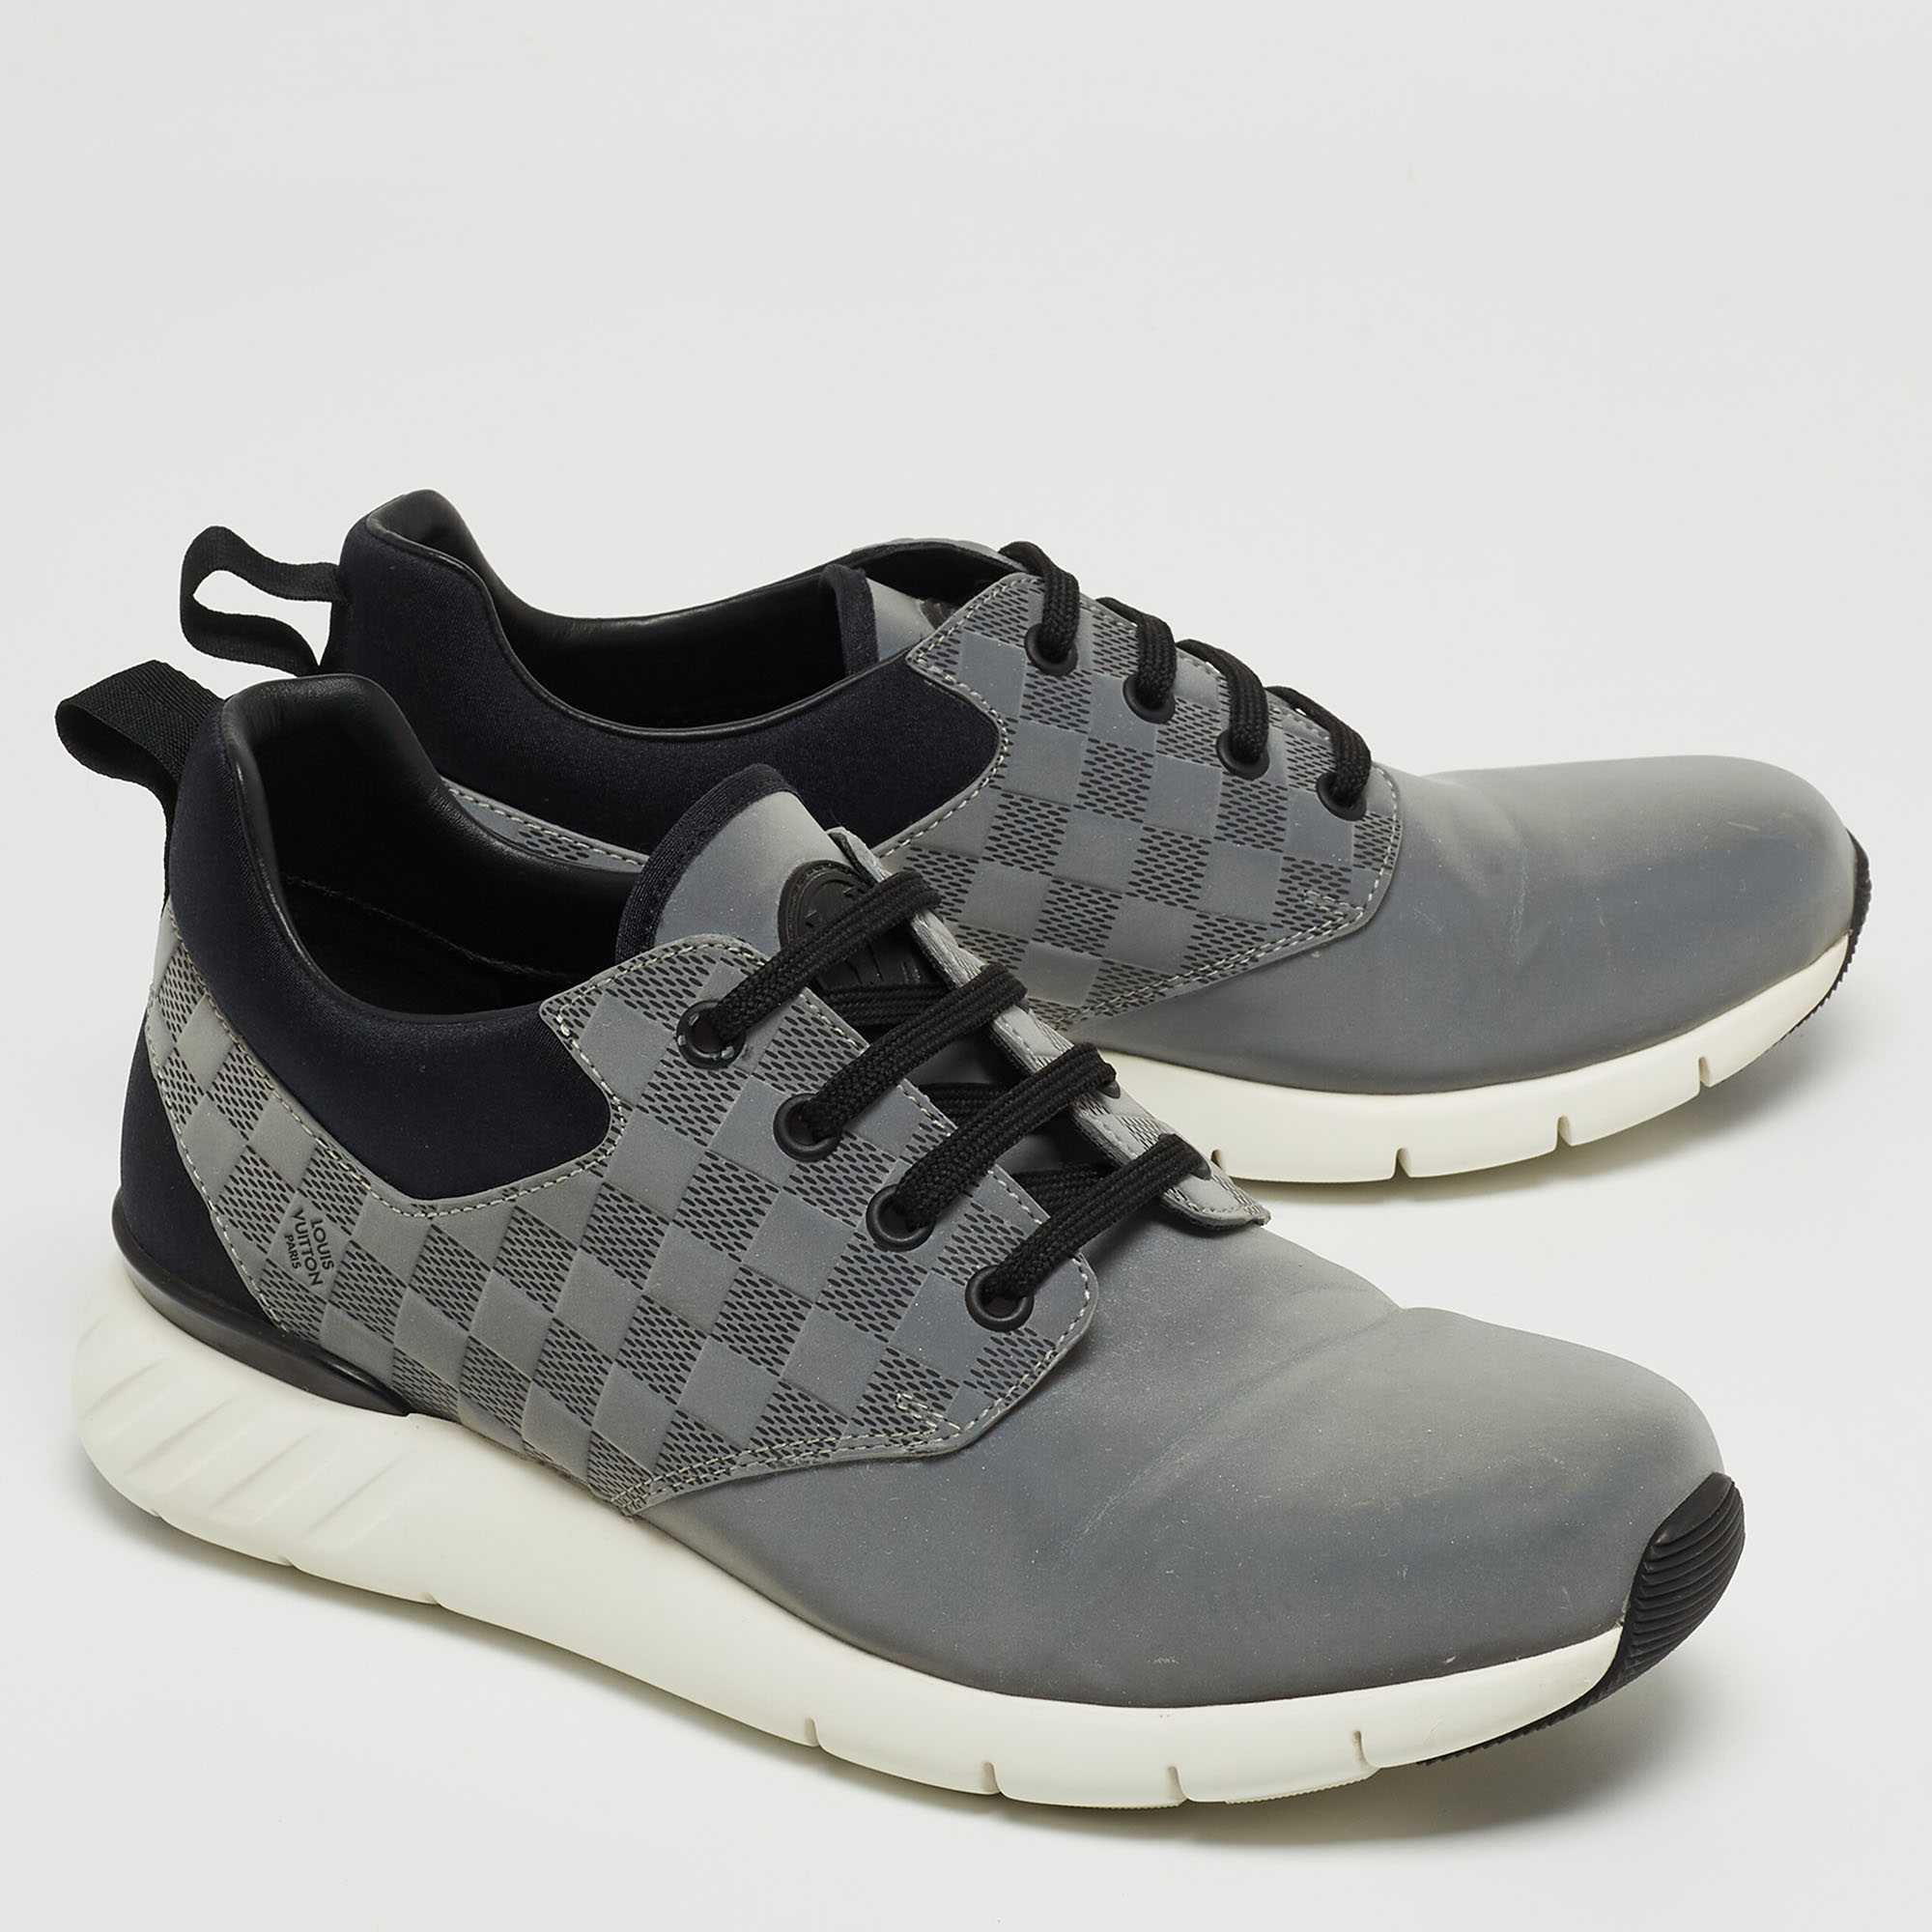 Louis Vuitton Grey/Black Fabric Fastlane Low Top Sneakers Size 39